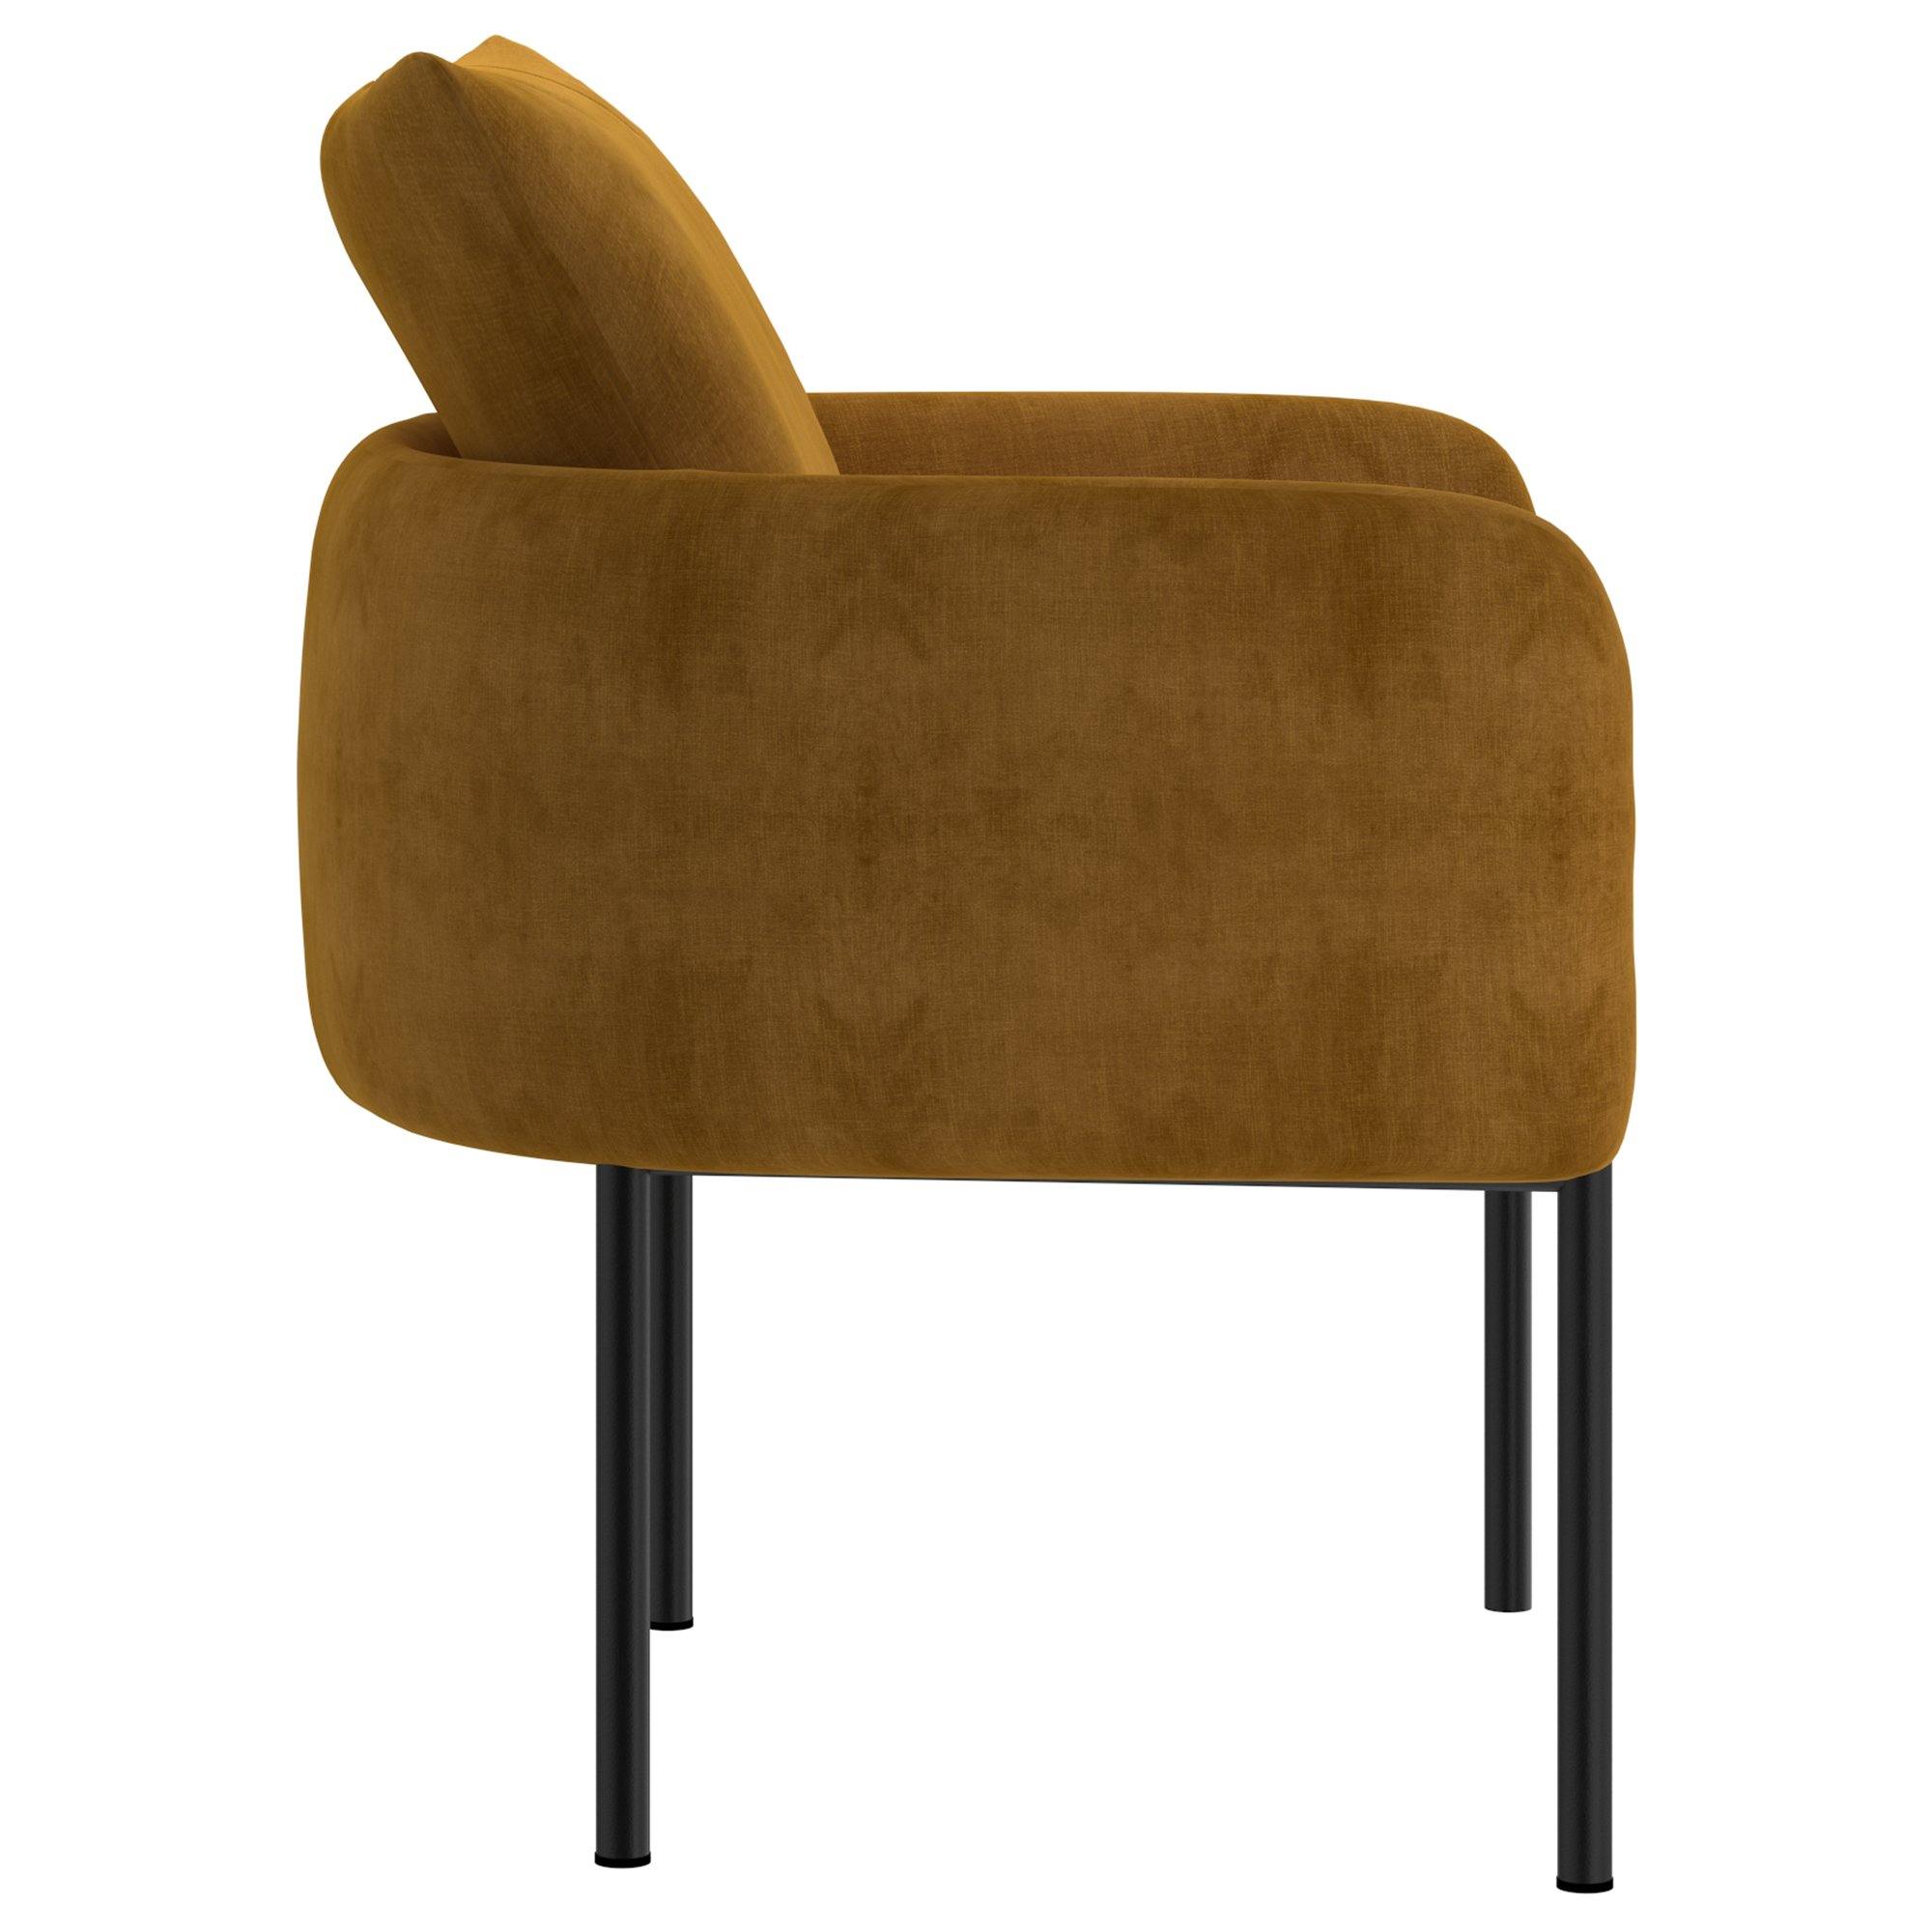 Petrie Mustard Accent Chair - Reimagine Designs - Armchair, new